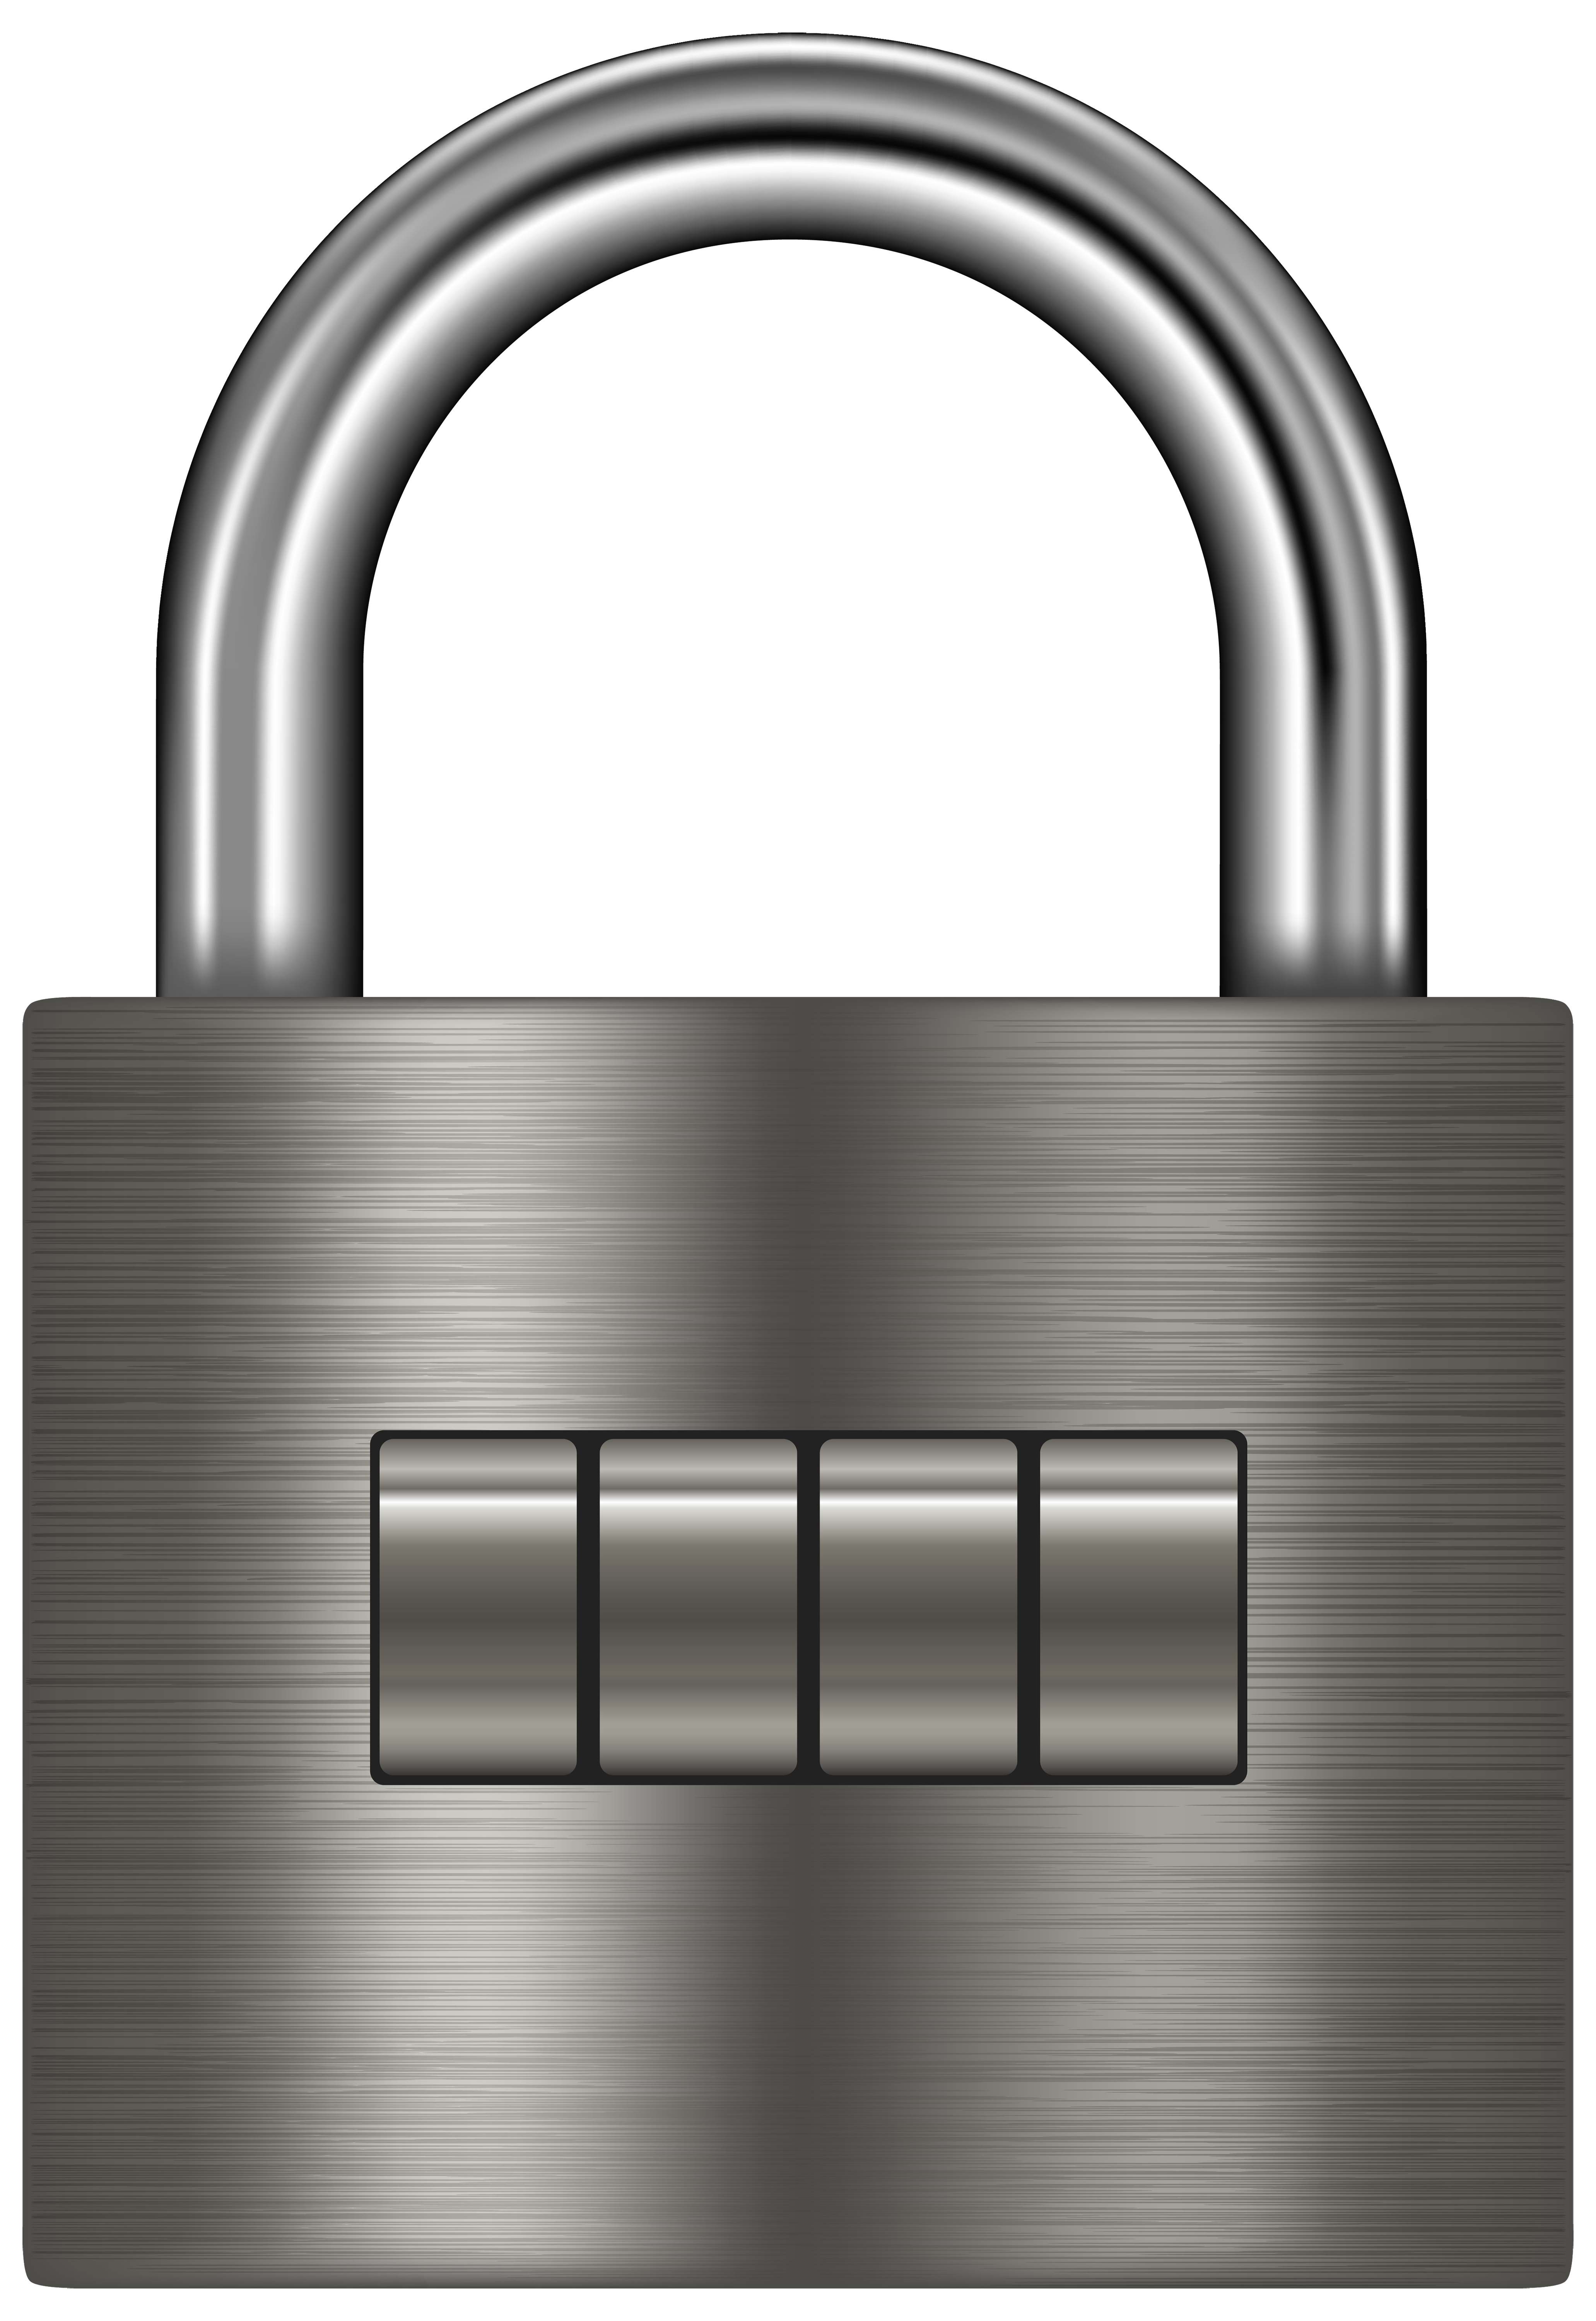 Silver locked padlock 14585783 PNG